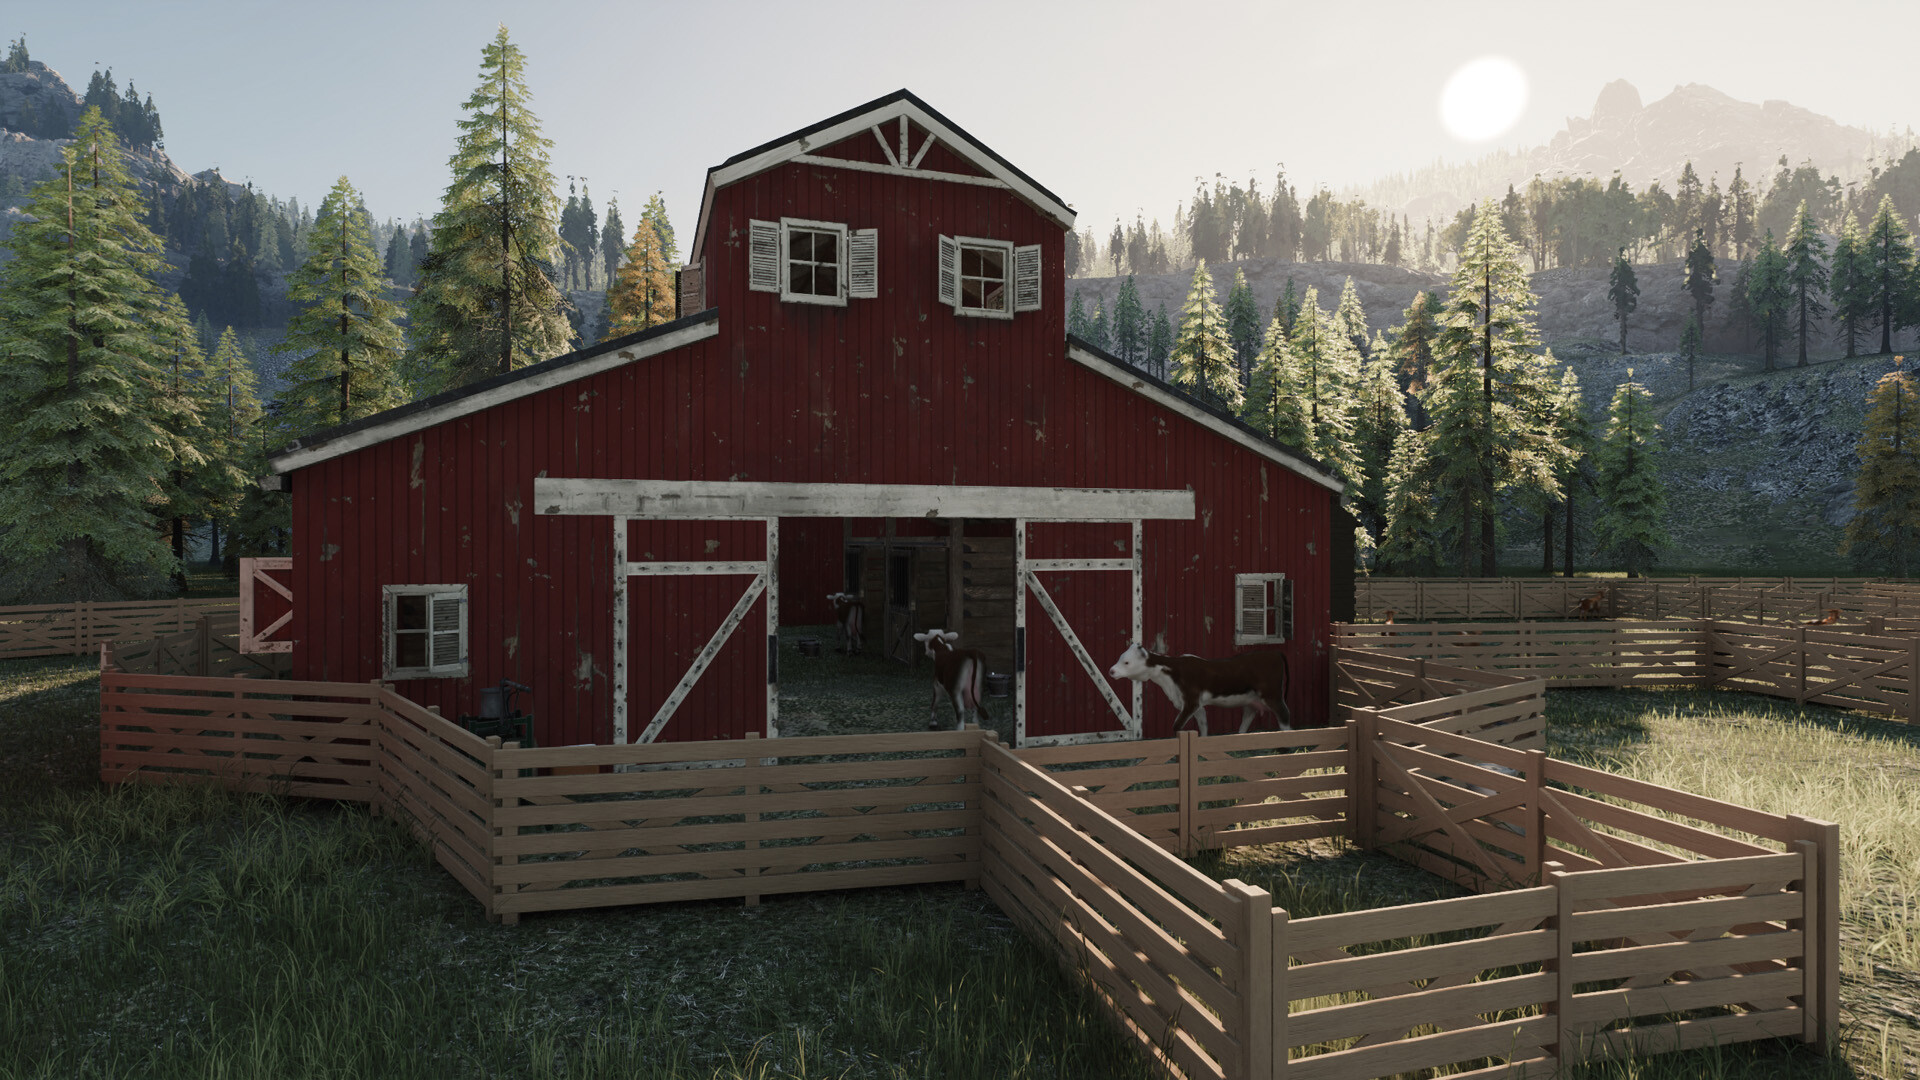 Ranch Simulator - Build, Farm, Hunt - UPDATE NOW LIVE